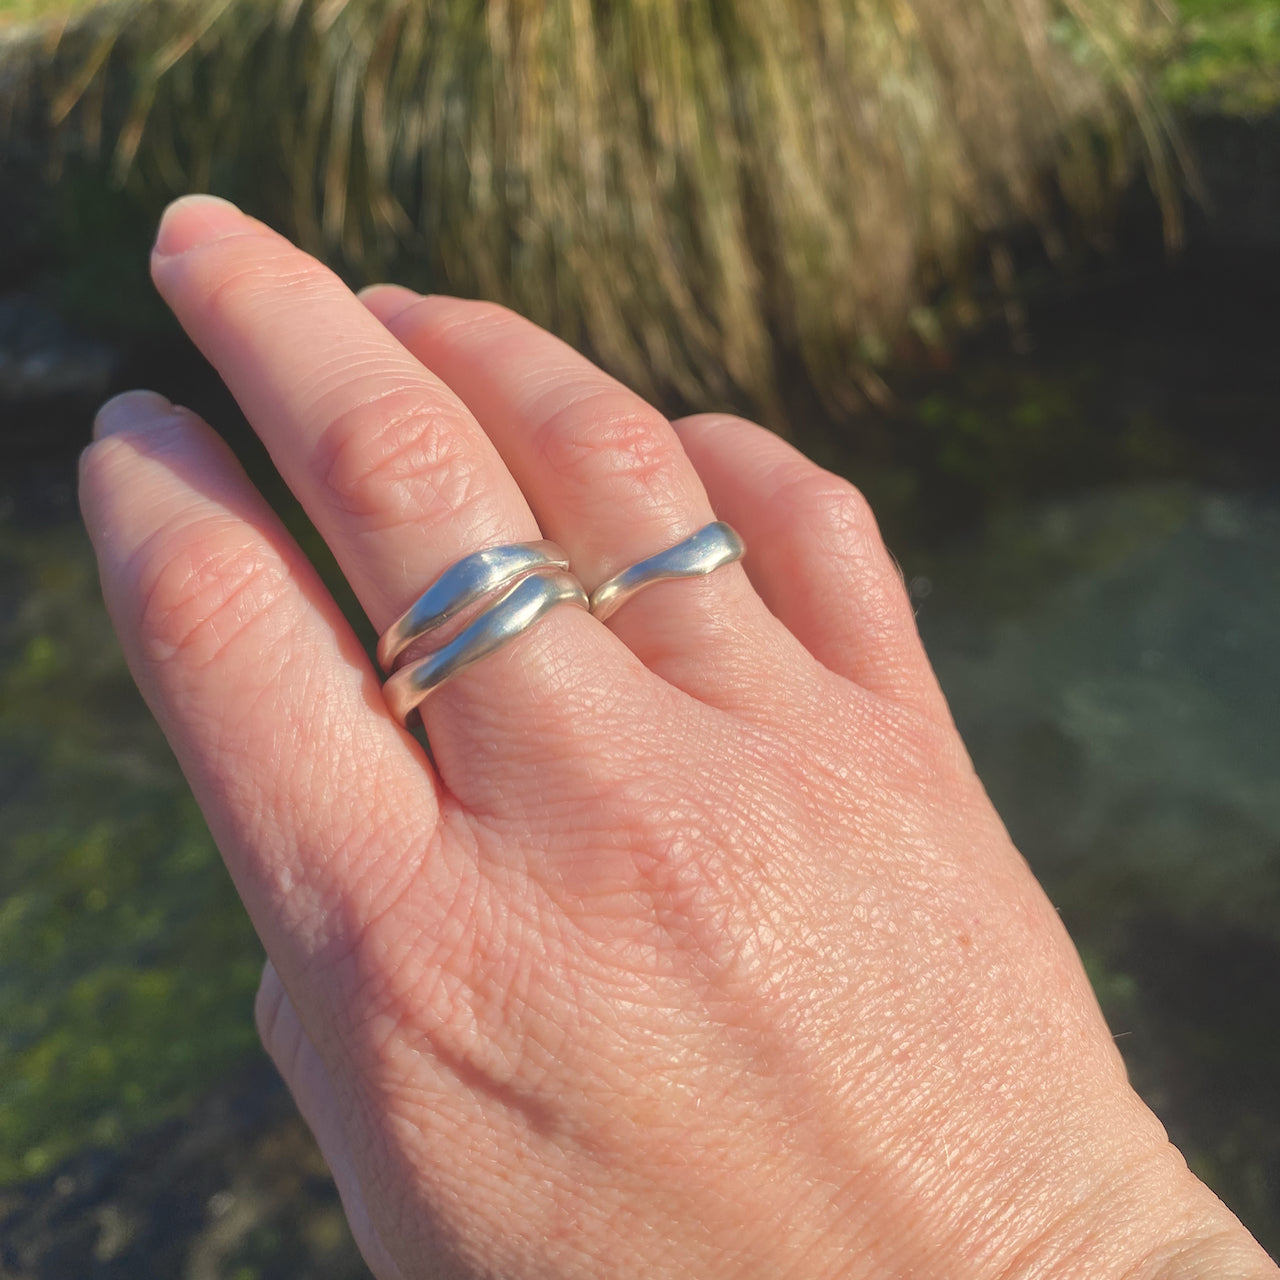 Waterworn silver rings worn by a Wānaka creek